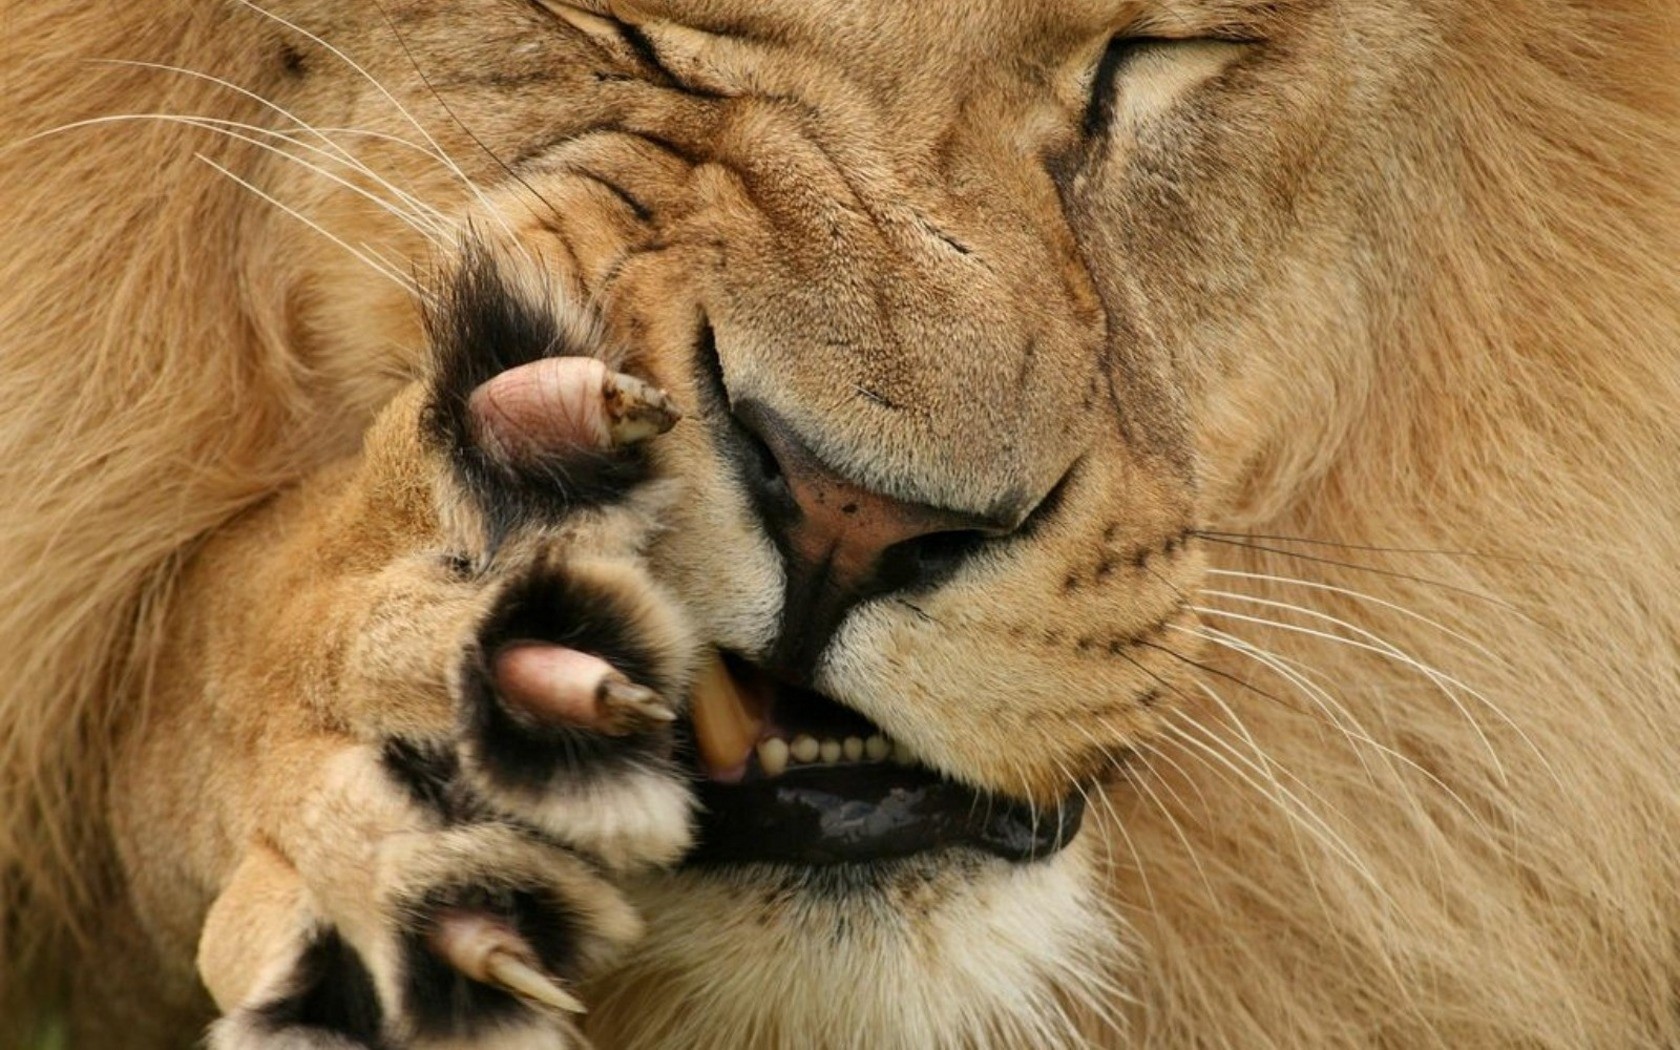 A majestic lion captured on a vibrant desktop wallpaper.